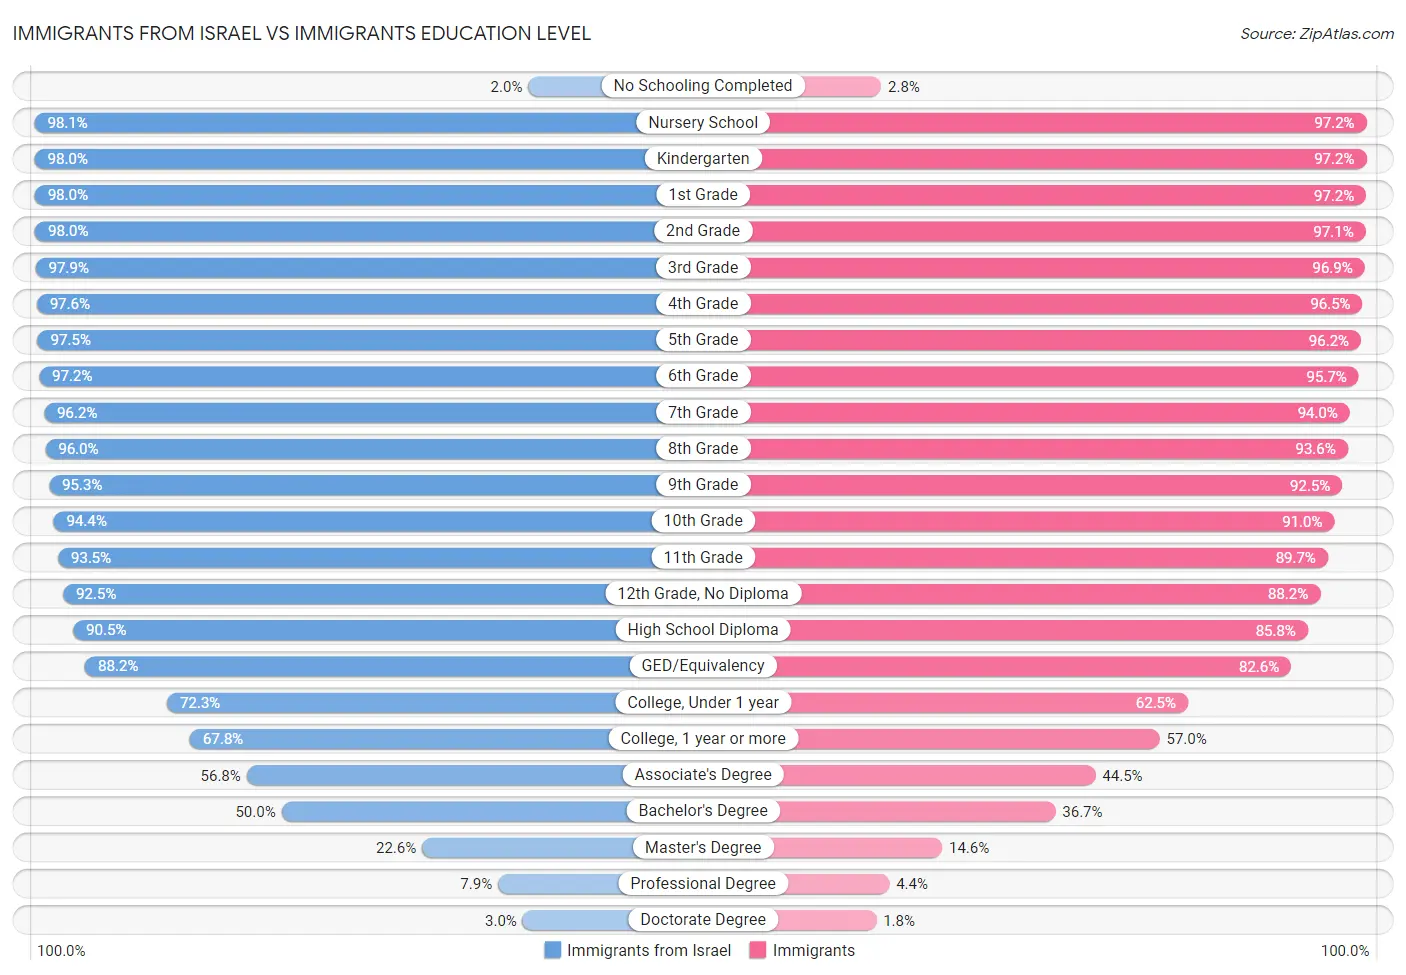 Immigrants from Israel vs Immigrants Education Level